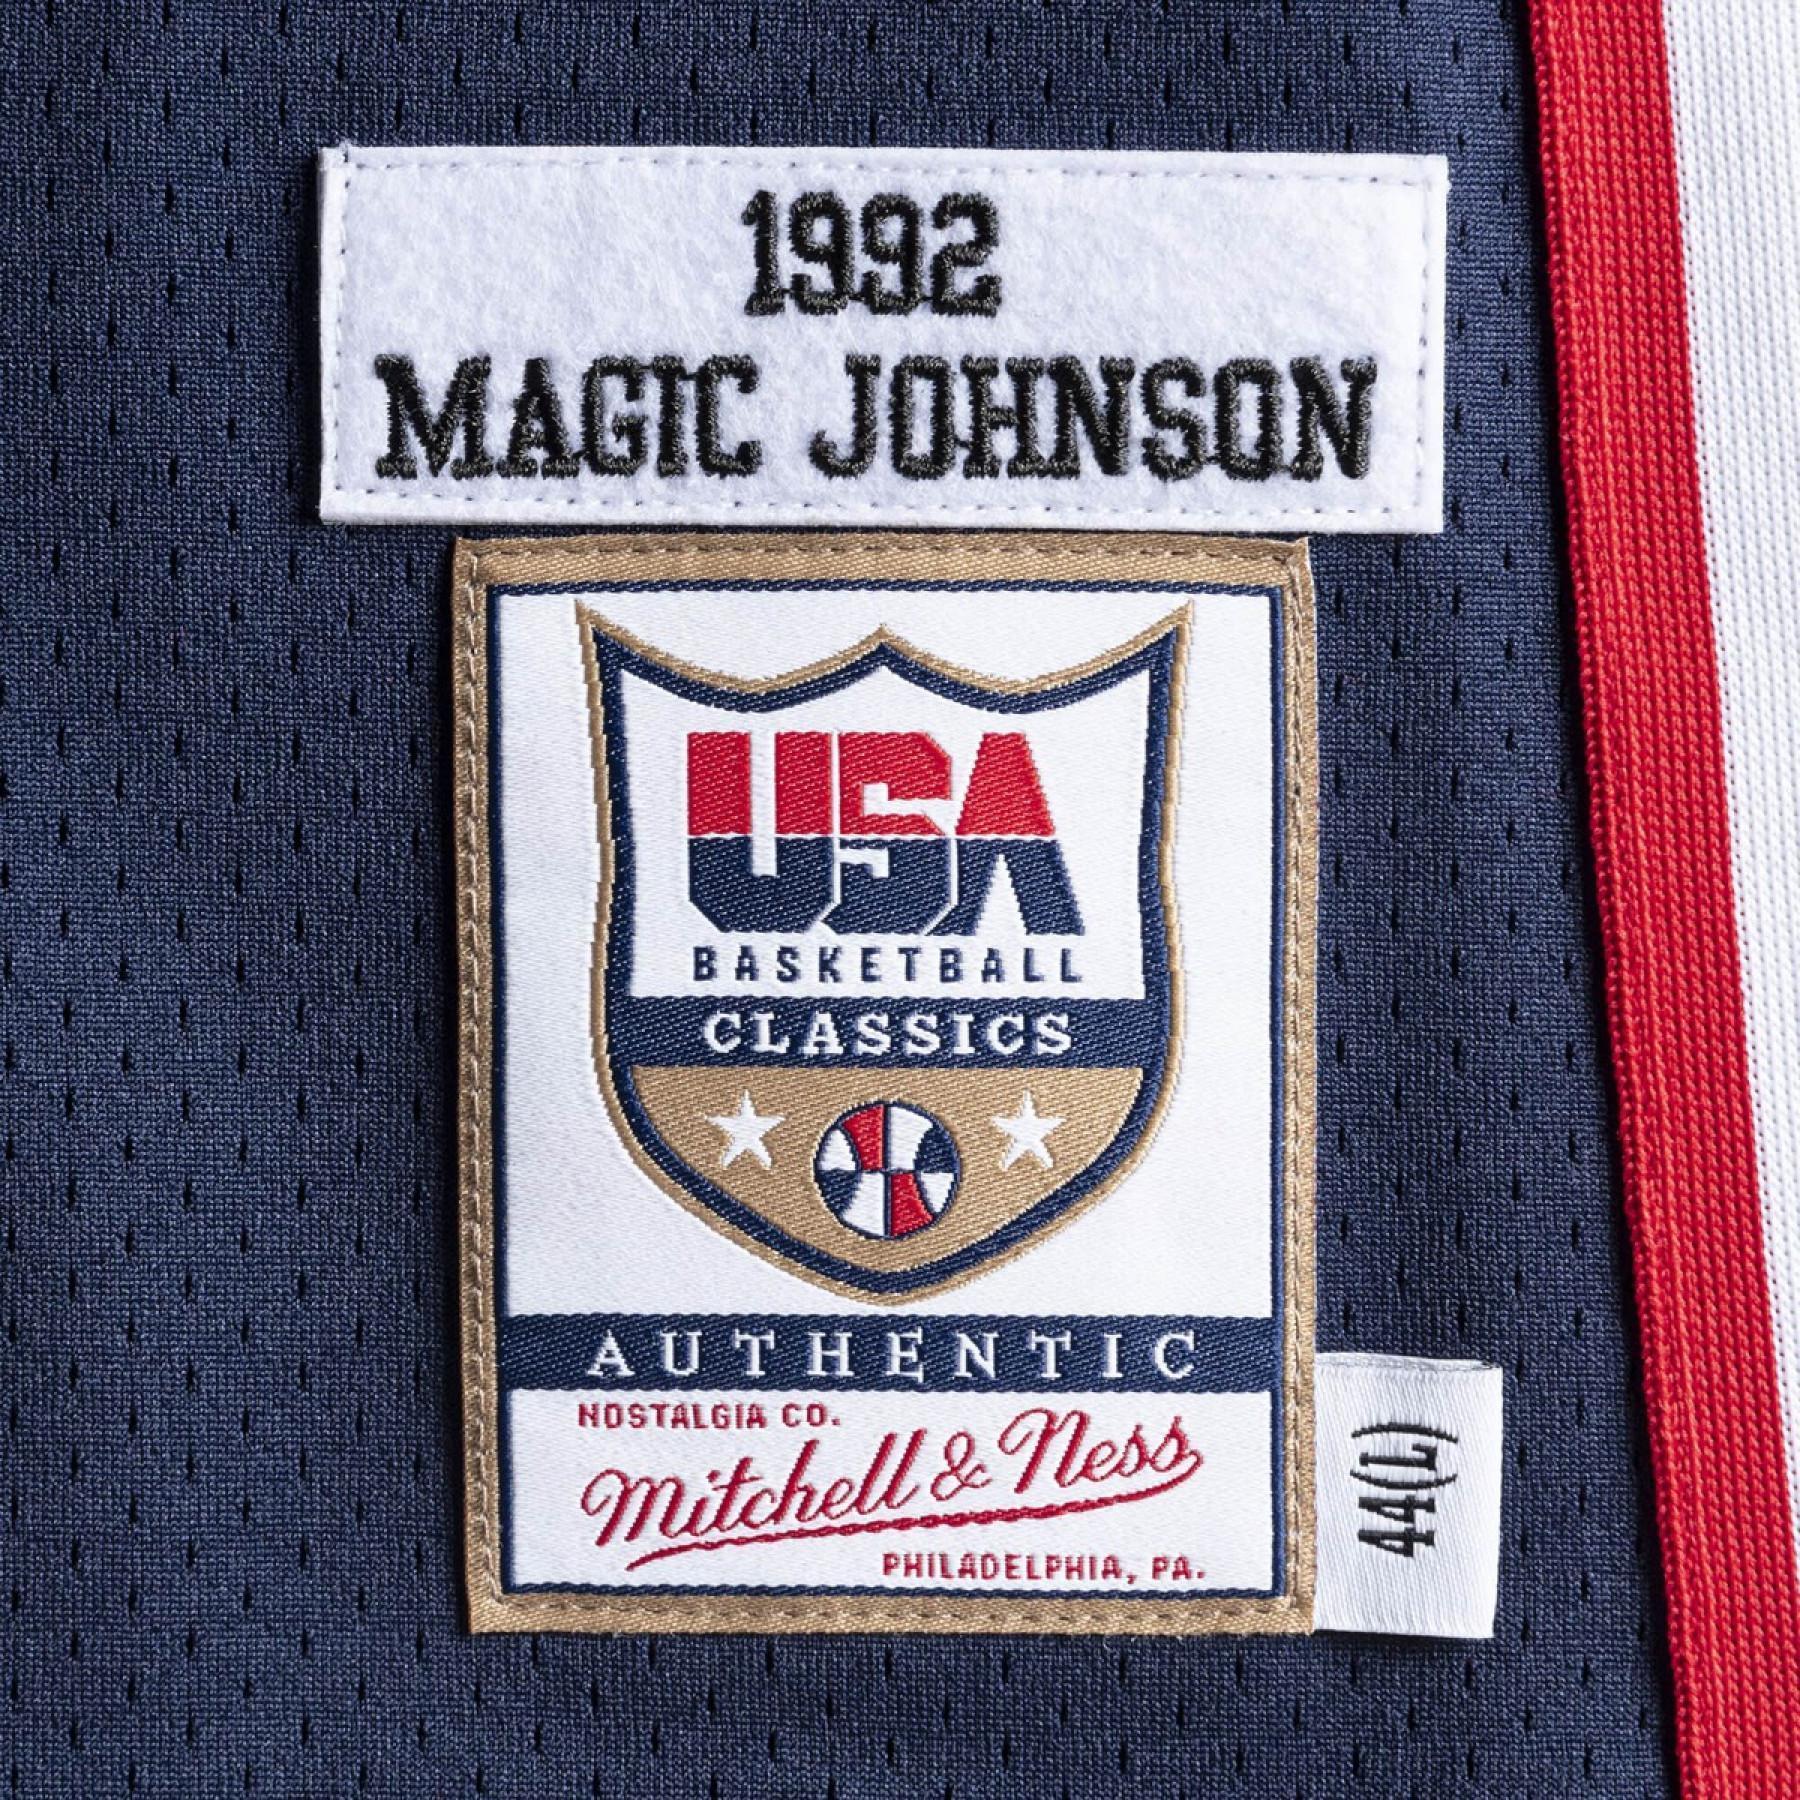 Camisola autêntico Team USA nba Magic Johnson